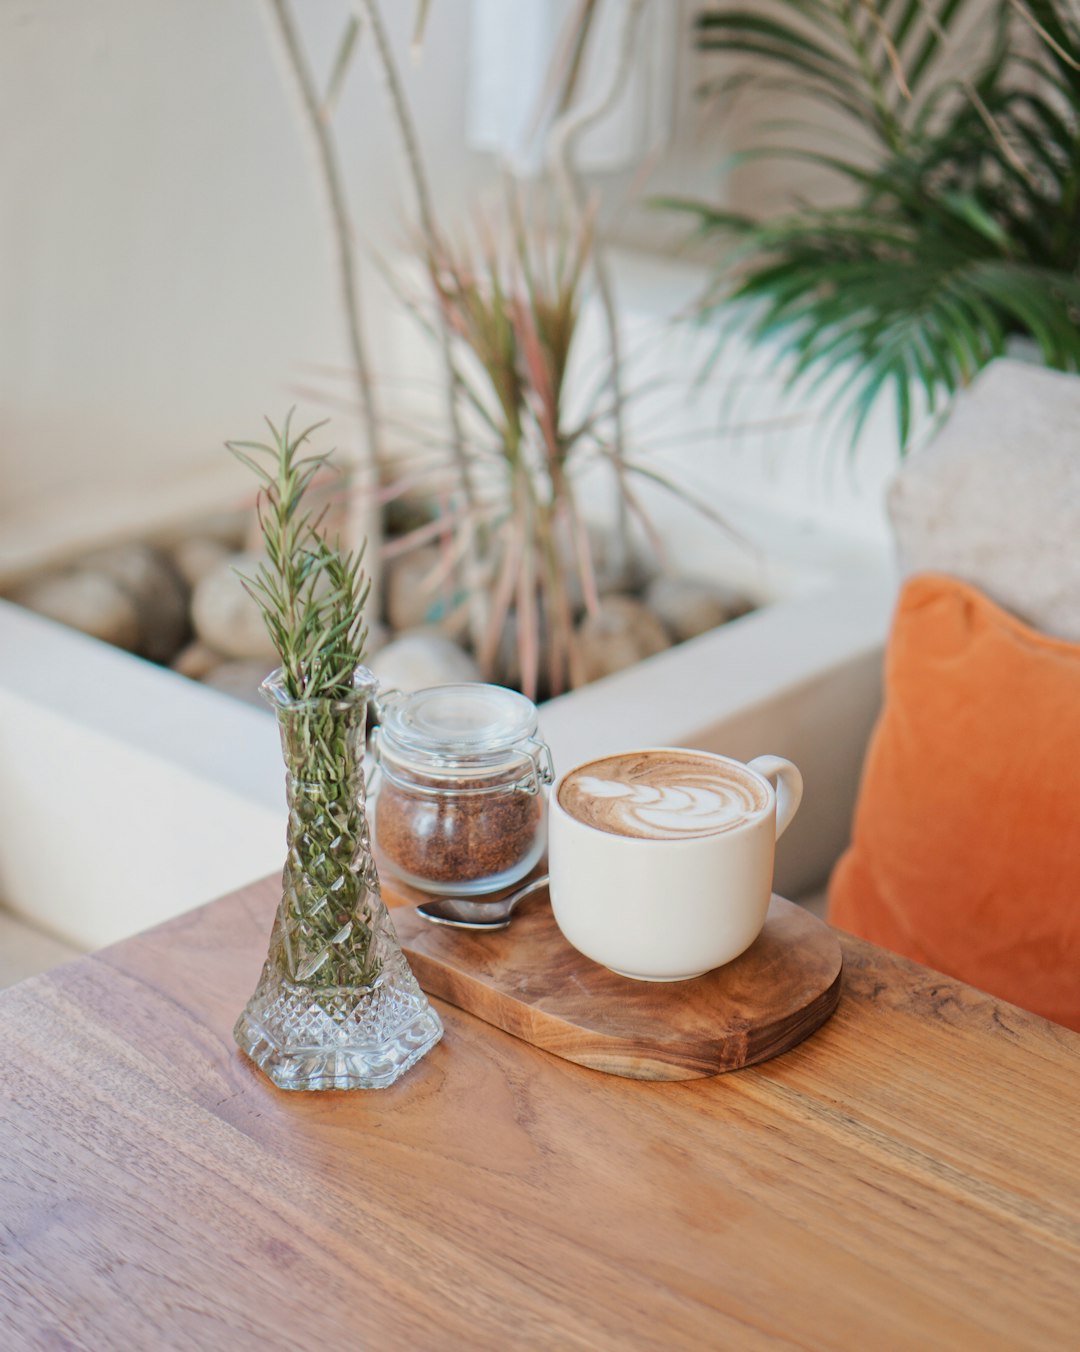 white liquid in clear glass jar beside white ceramic mug on brown wooden table